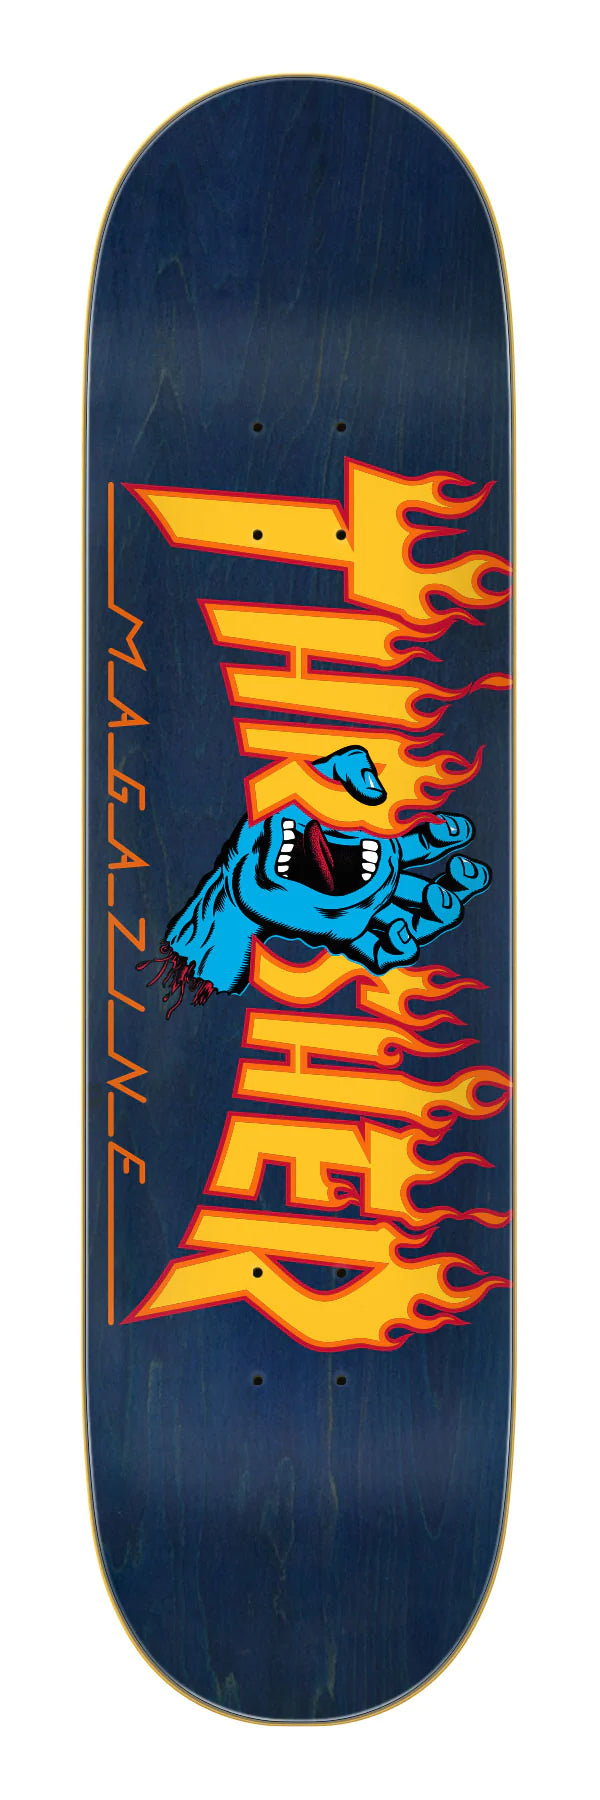 Santa Cruz Deck Thrasher Screaming flame logo skateboard deck 8.25x31.8